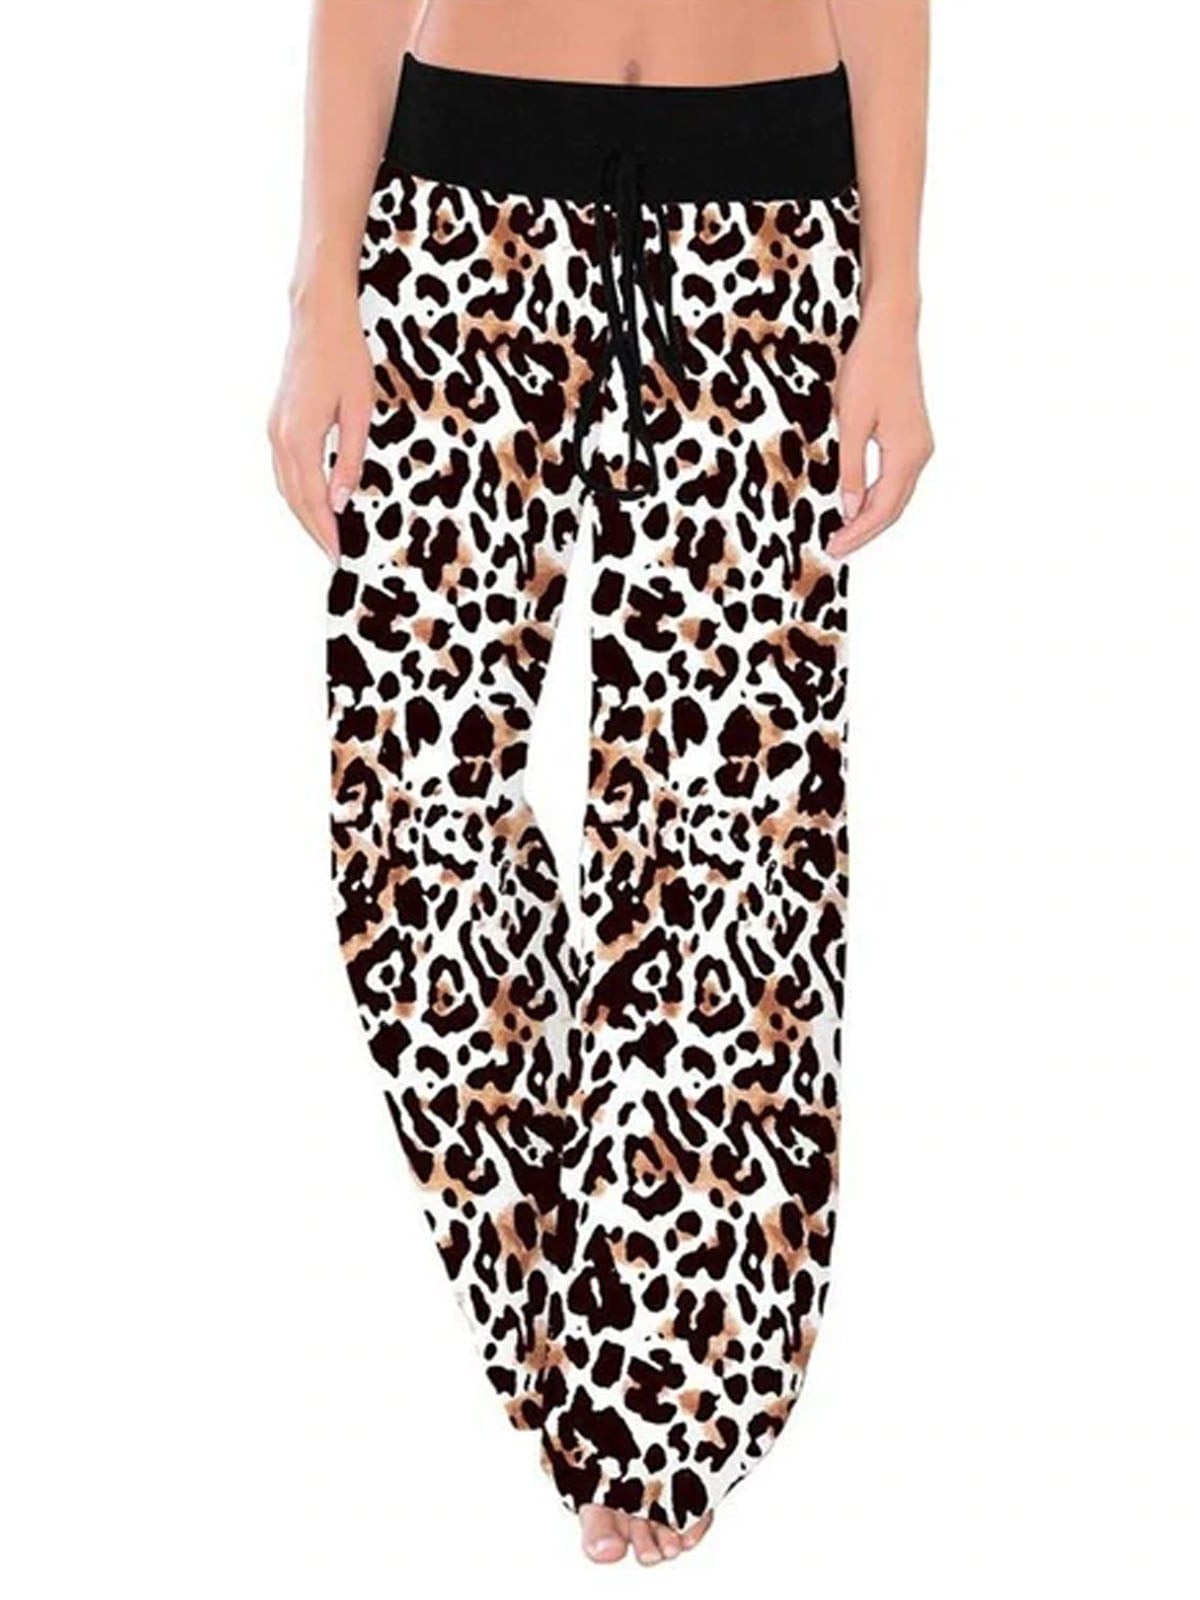 Women's Loungewear┃Cute Cheetah Print Fit Yoga Pants - Mia Belle Girls